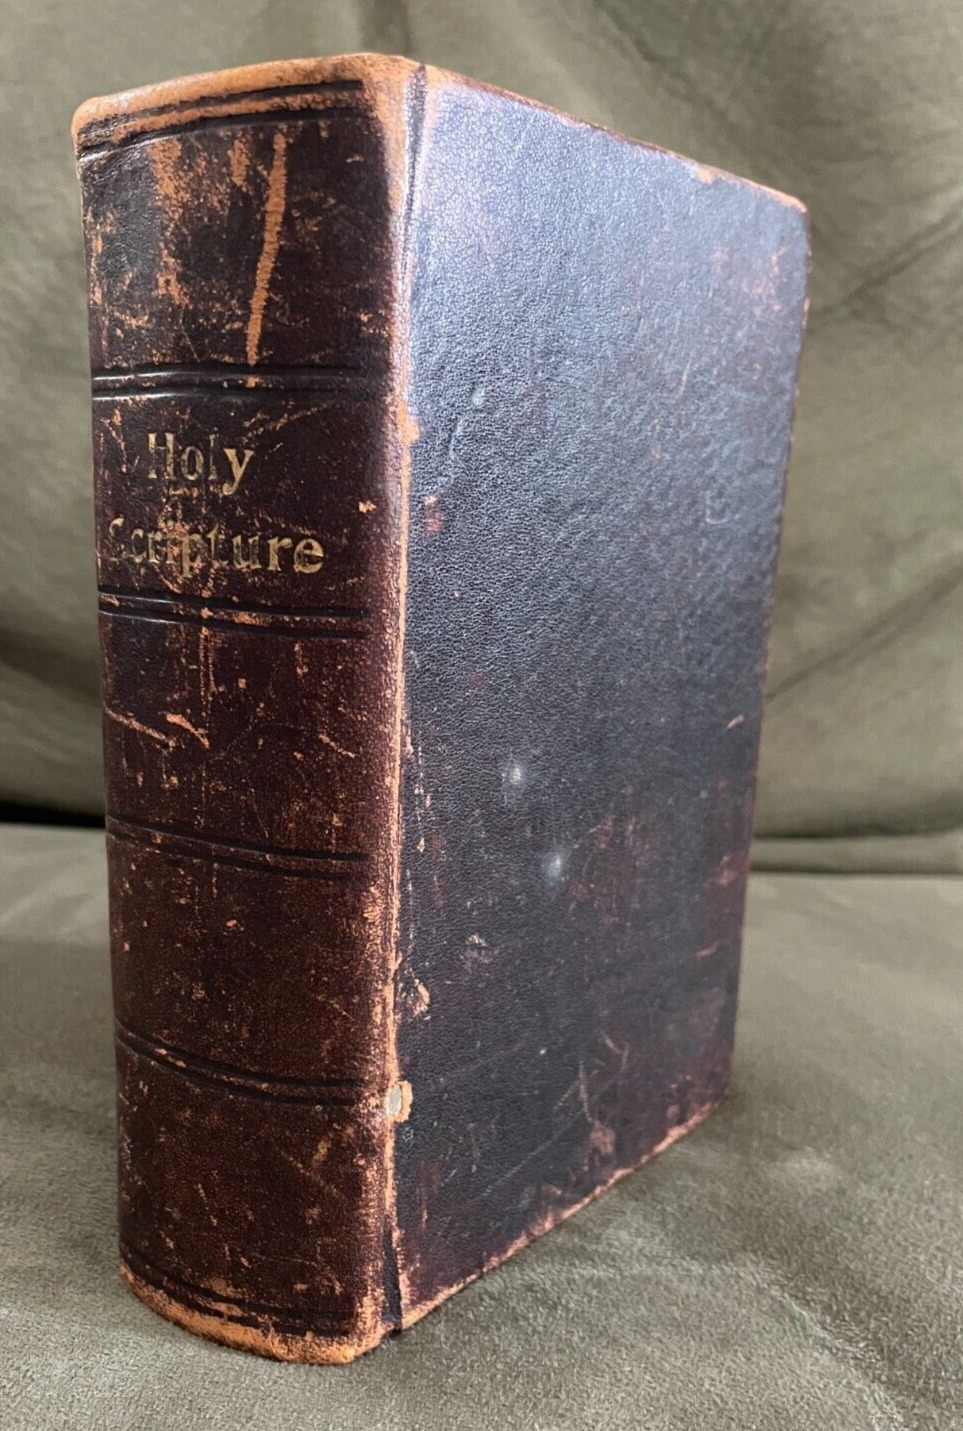 1867 Holy Scripture Plano **RARE** LDS Mormon book